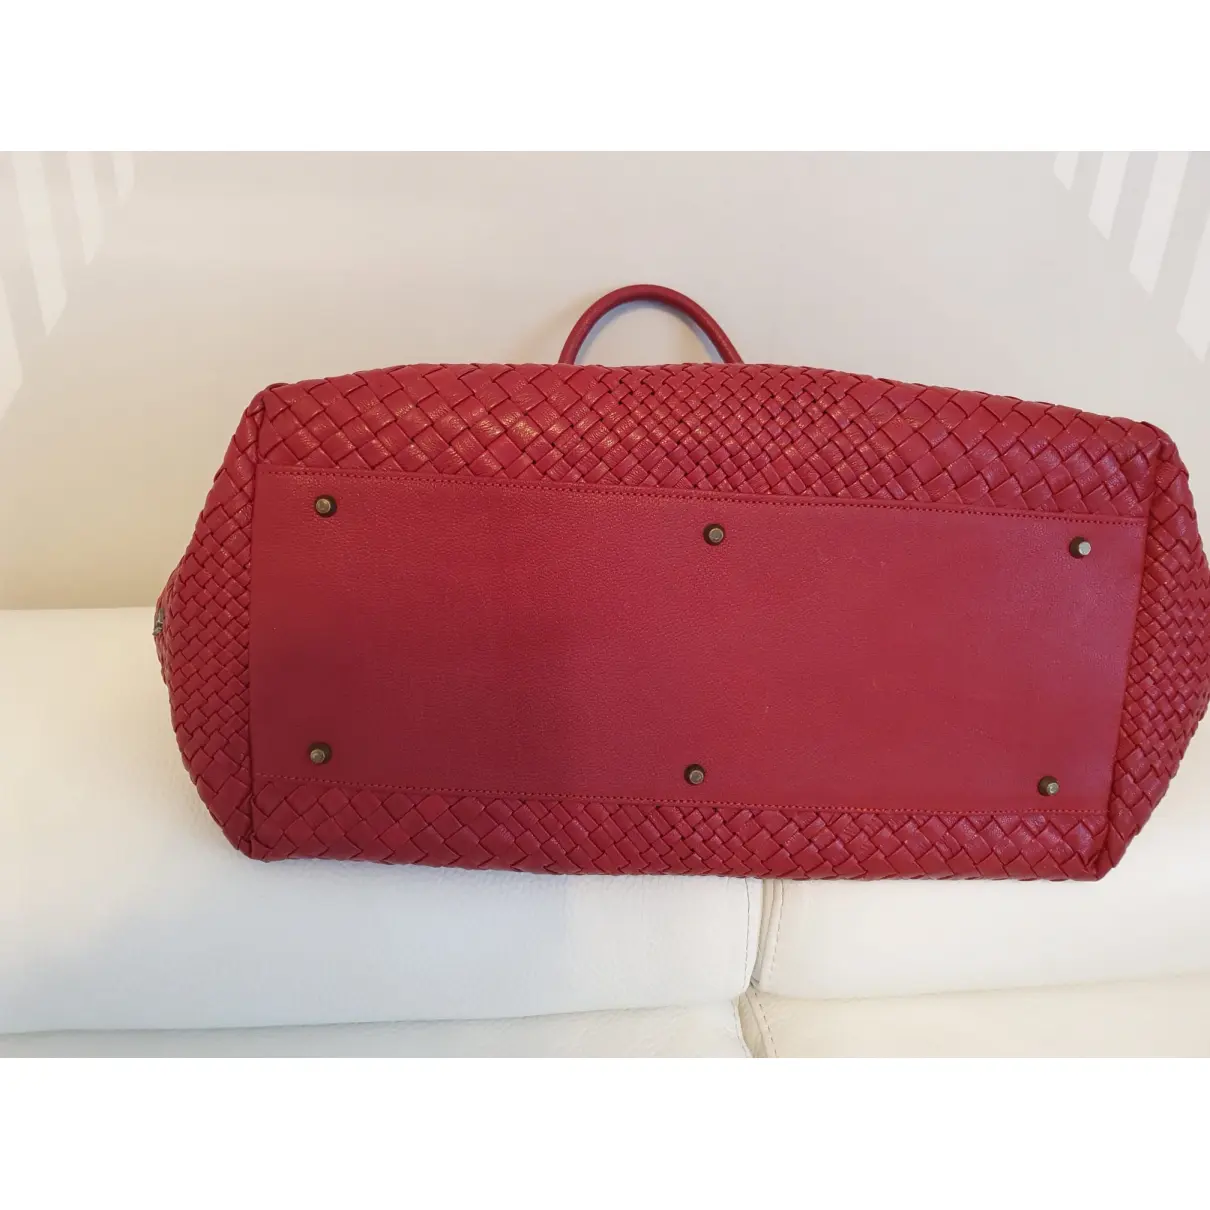 Leather handbag Ghibli